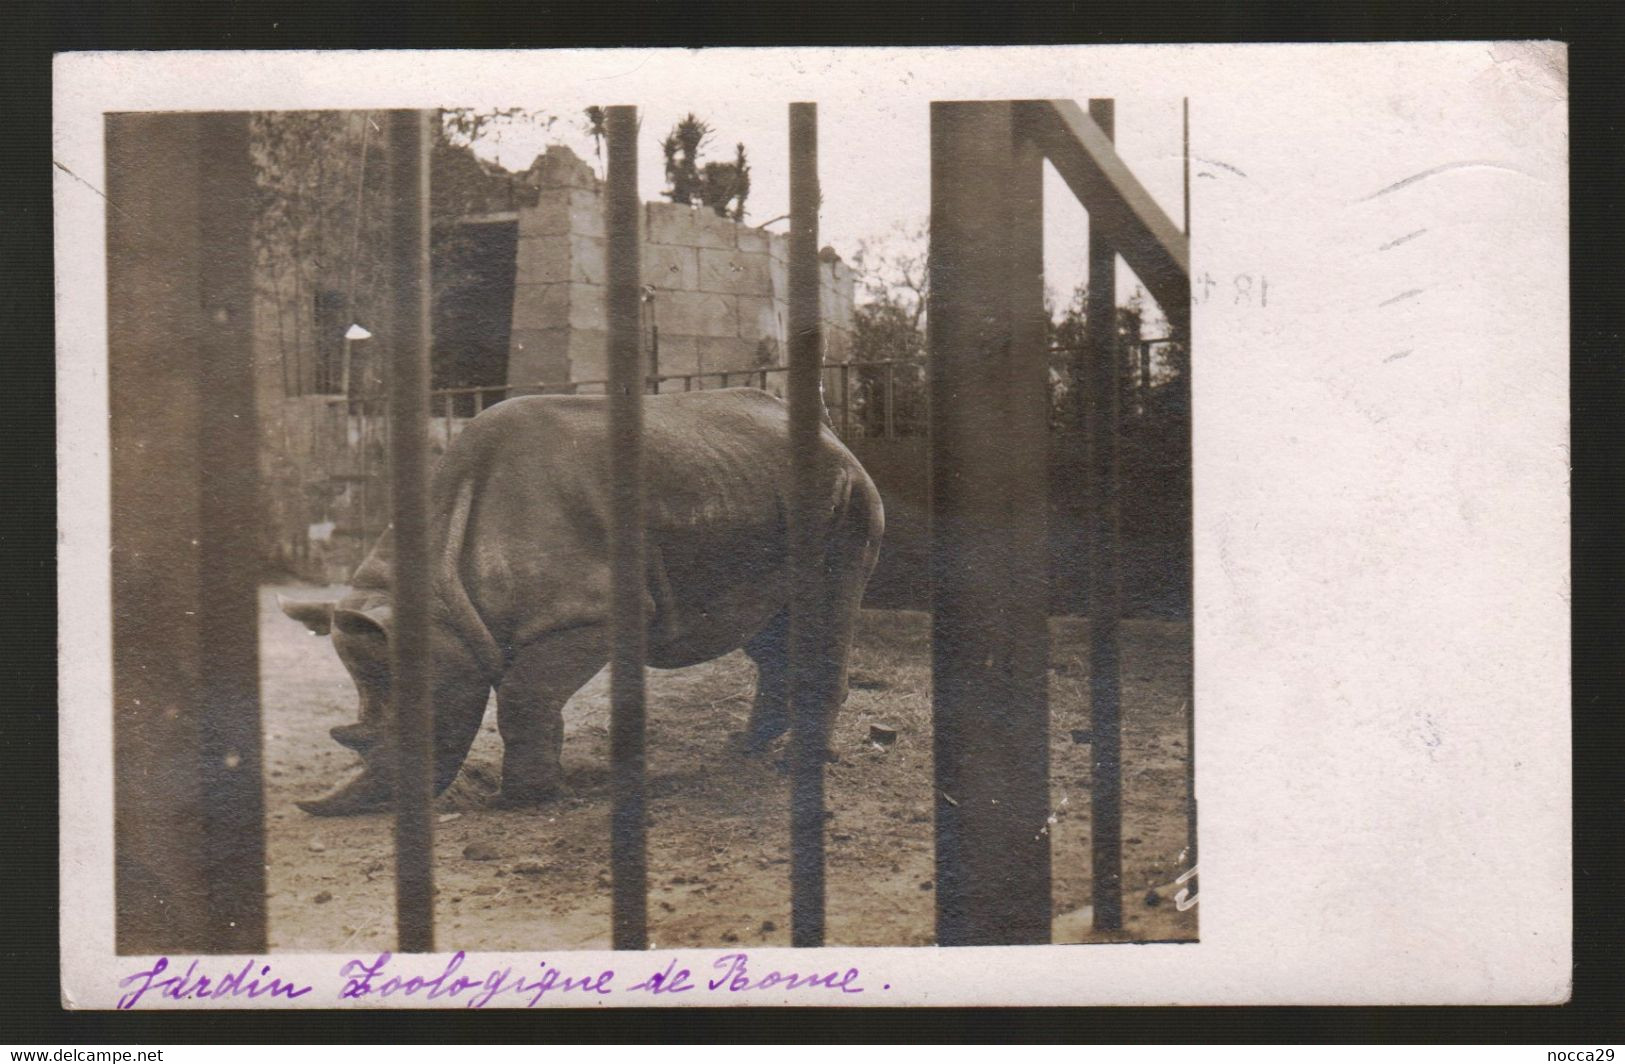 ZOO DI ROMA - FOTOCARTOLINA  VIAGGIATA NEL 1911 - RINOCERONTE - RHINOCEROS - NASHORN - UNICA!!!! - Rhinoceros